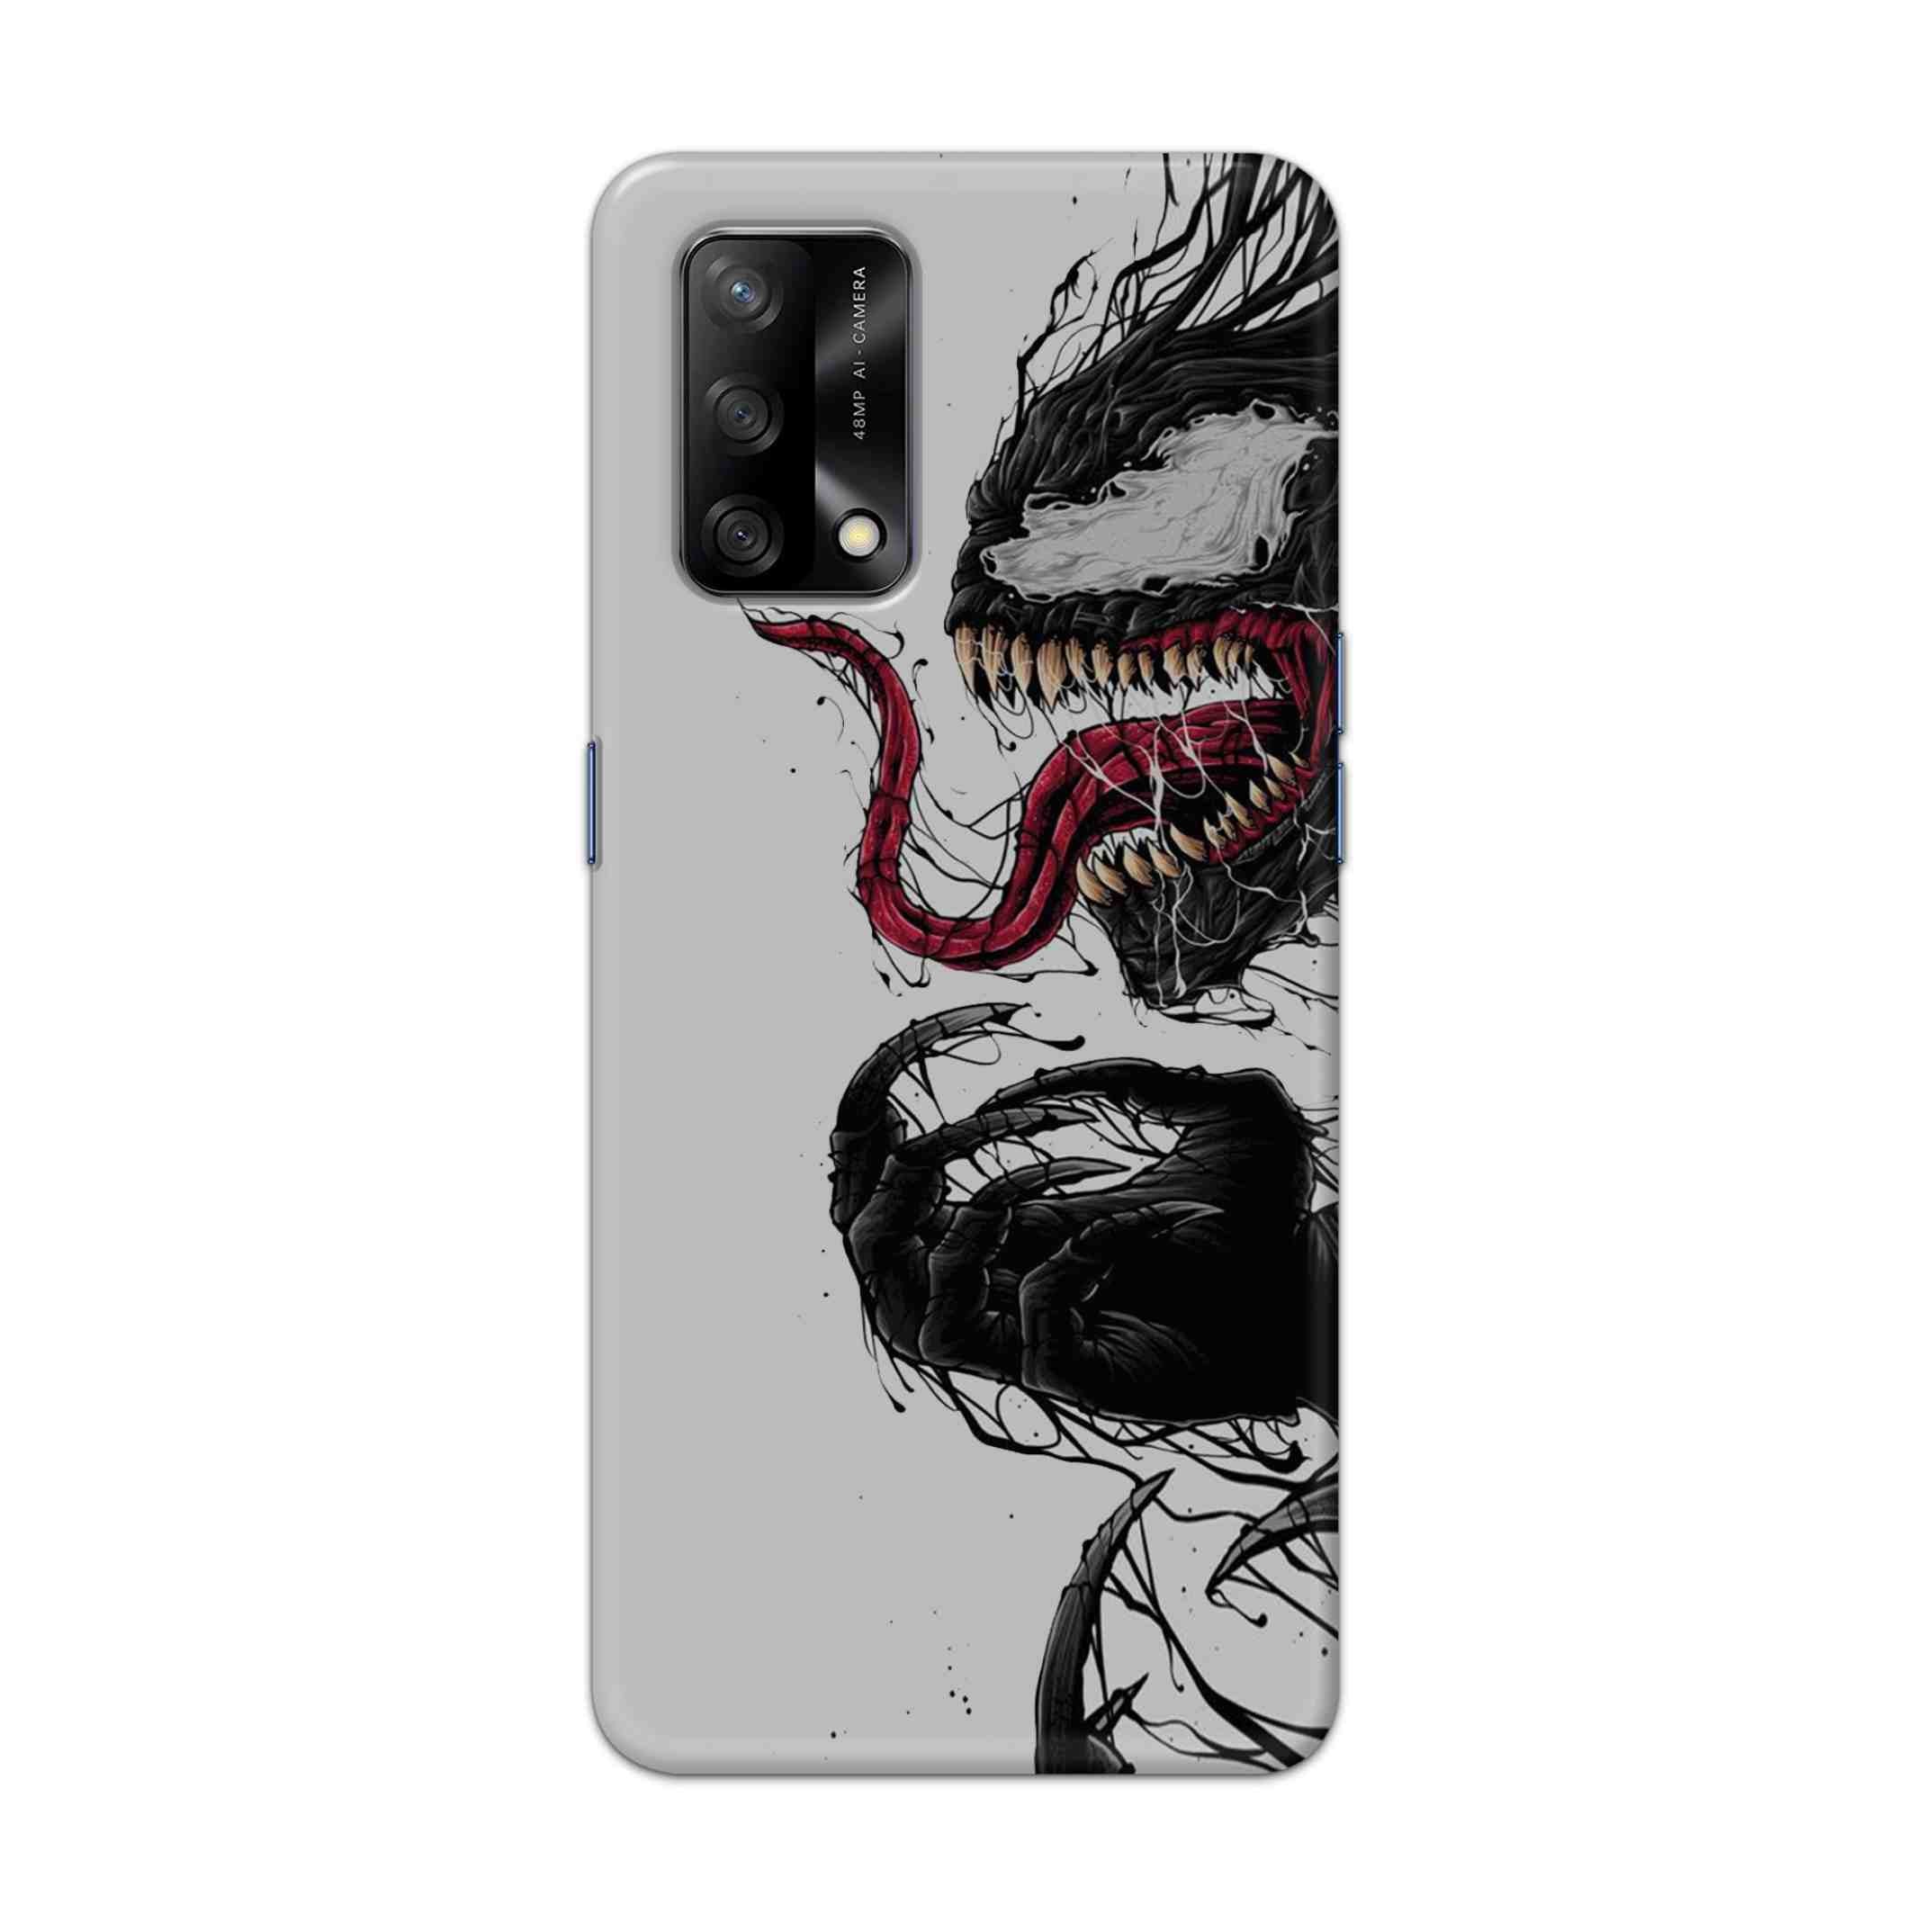 Buy Venom Crazy Hard Back Mobile Phone Case Cover For Oppo F19 Online